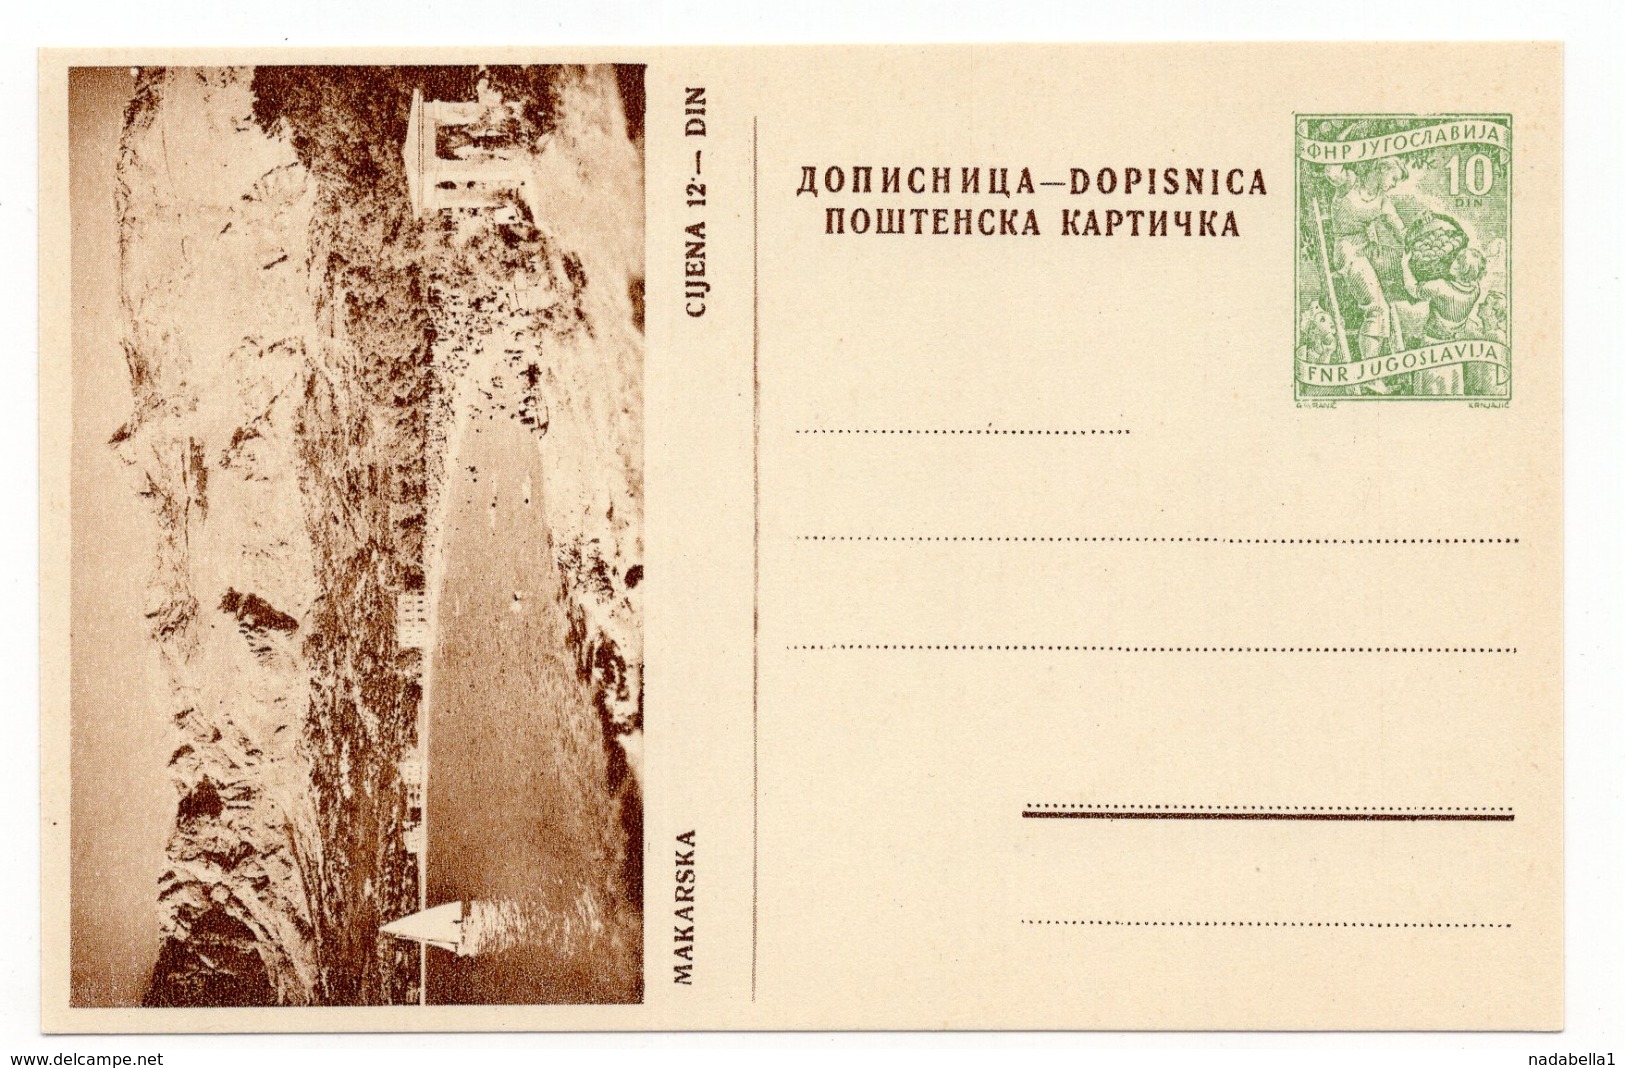 1953 YUGOSLAVIA, CROATIA, MAKARSKA, 10 DINARA GREEN, ILLUSTRATED STATIONERY CARD, MINT - Postal Stationery